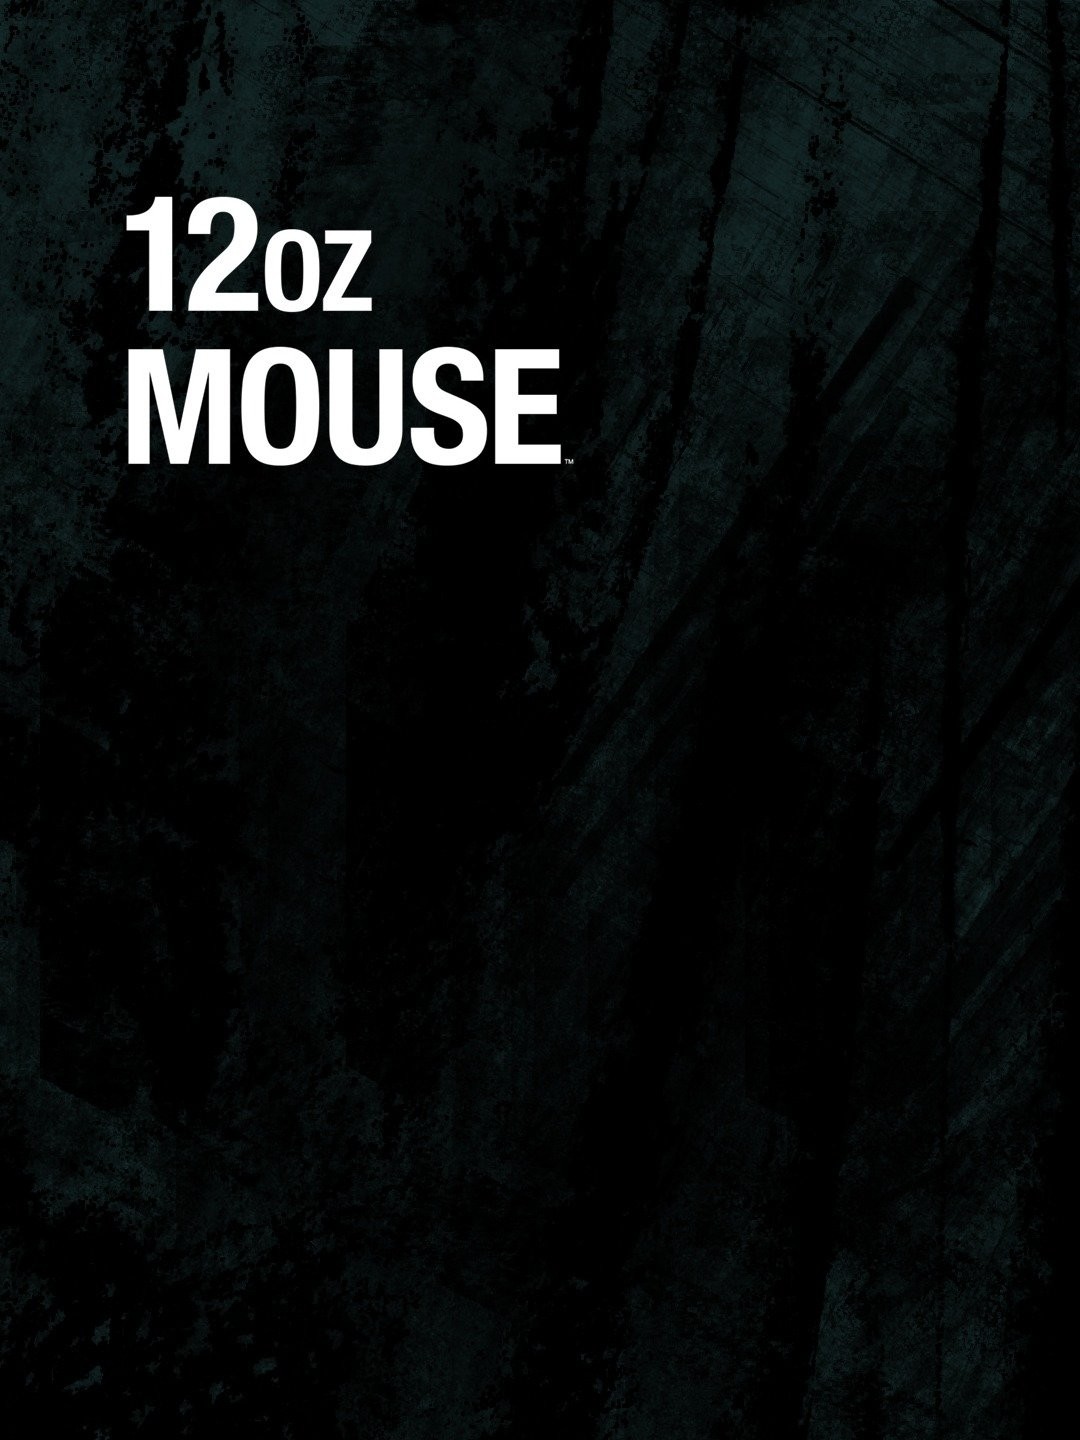 12 oz. Mouse - Wikipedia